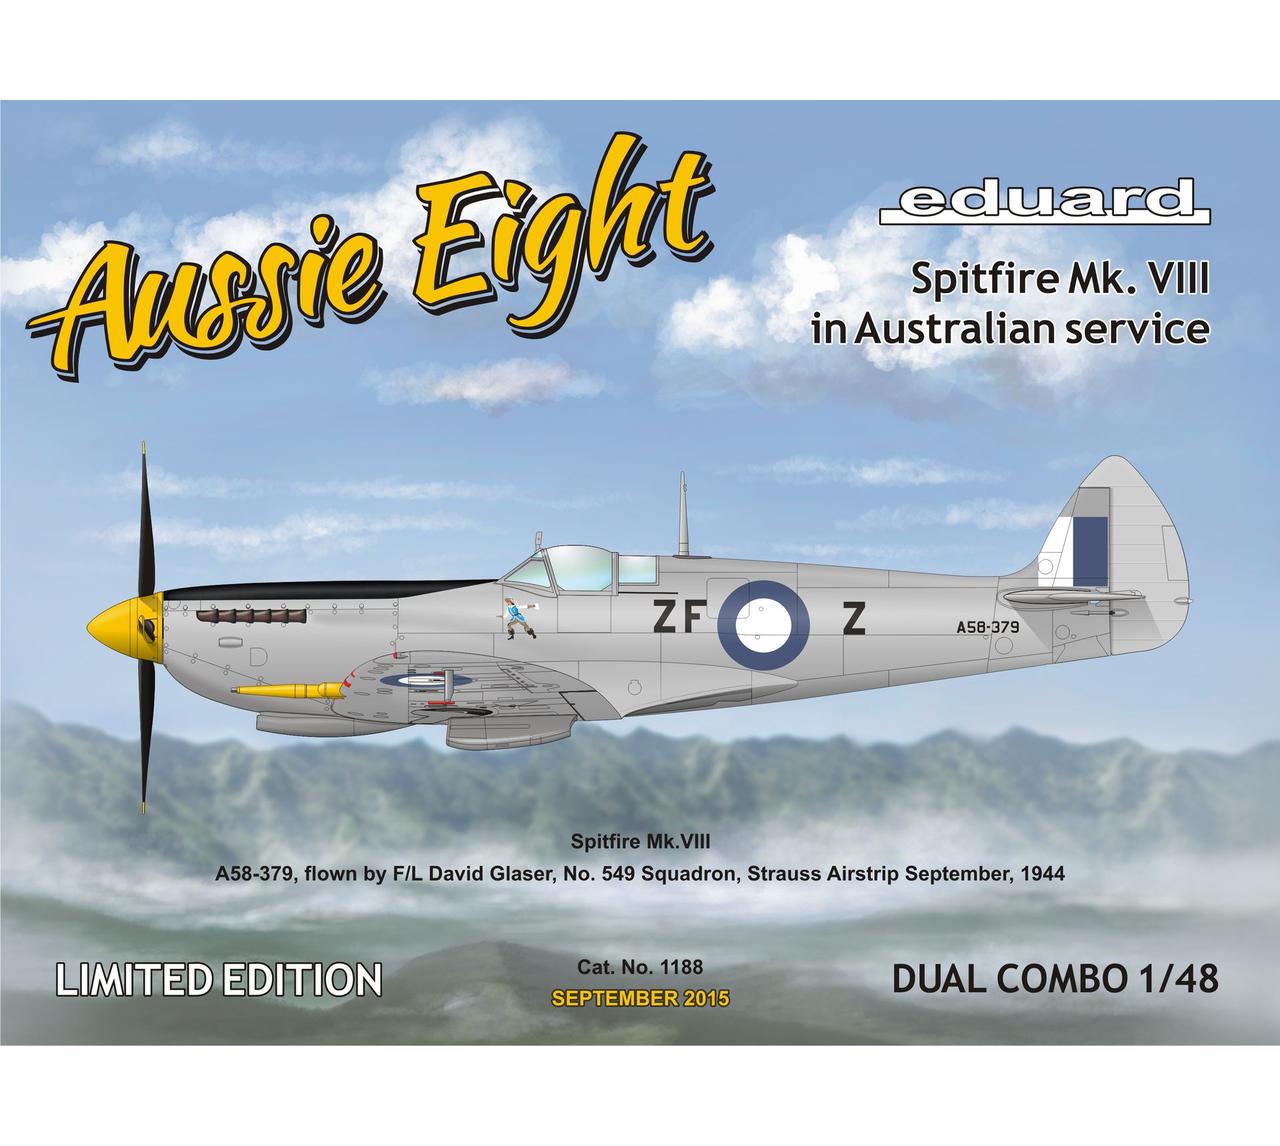 Eduard Spitfire-kavalkad, Aussie Eight #1 klar, Aussie Eight #2 NY!, Bonus: Airfix Spitfire XII - Sida 12 04